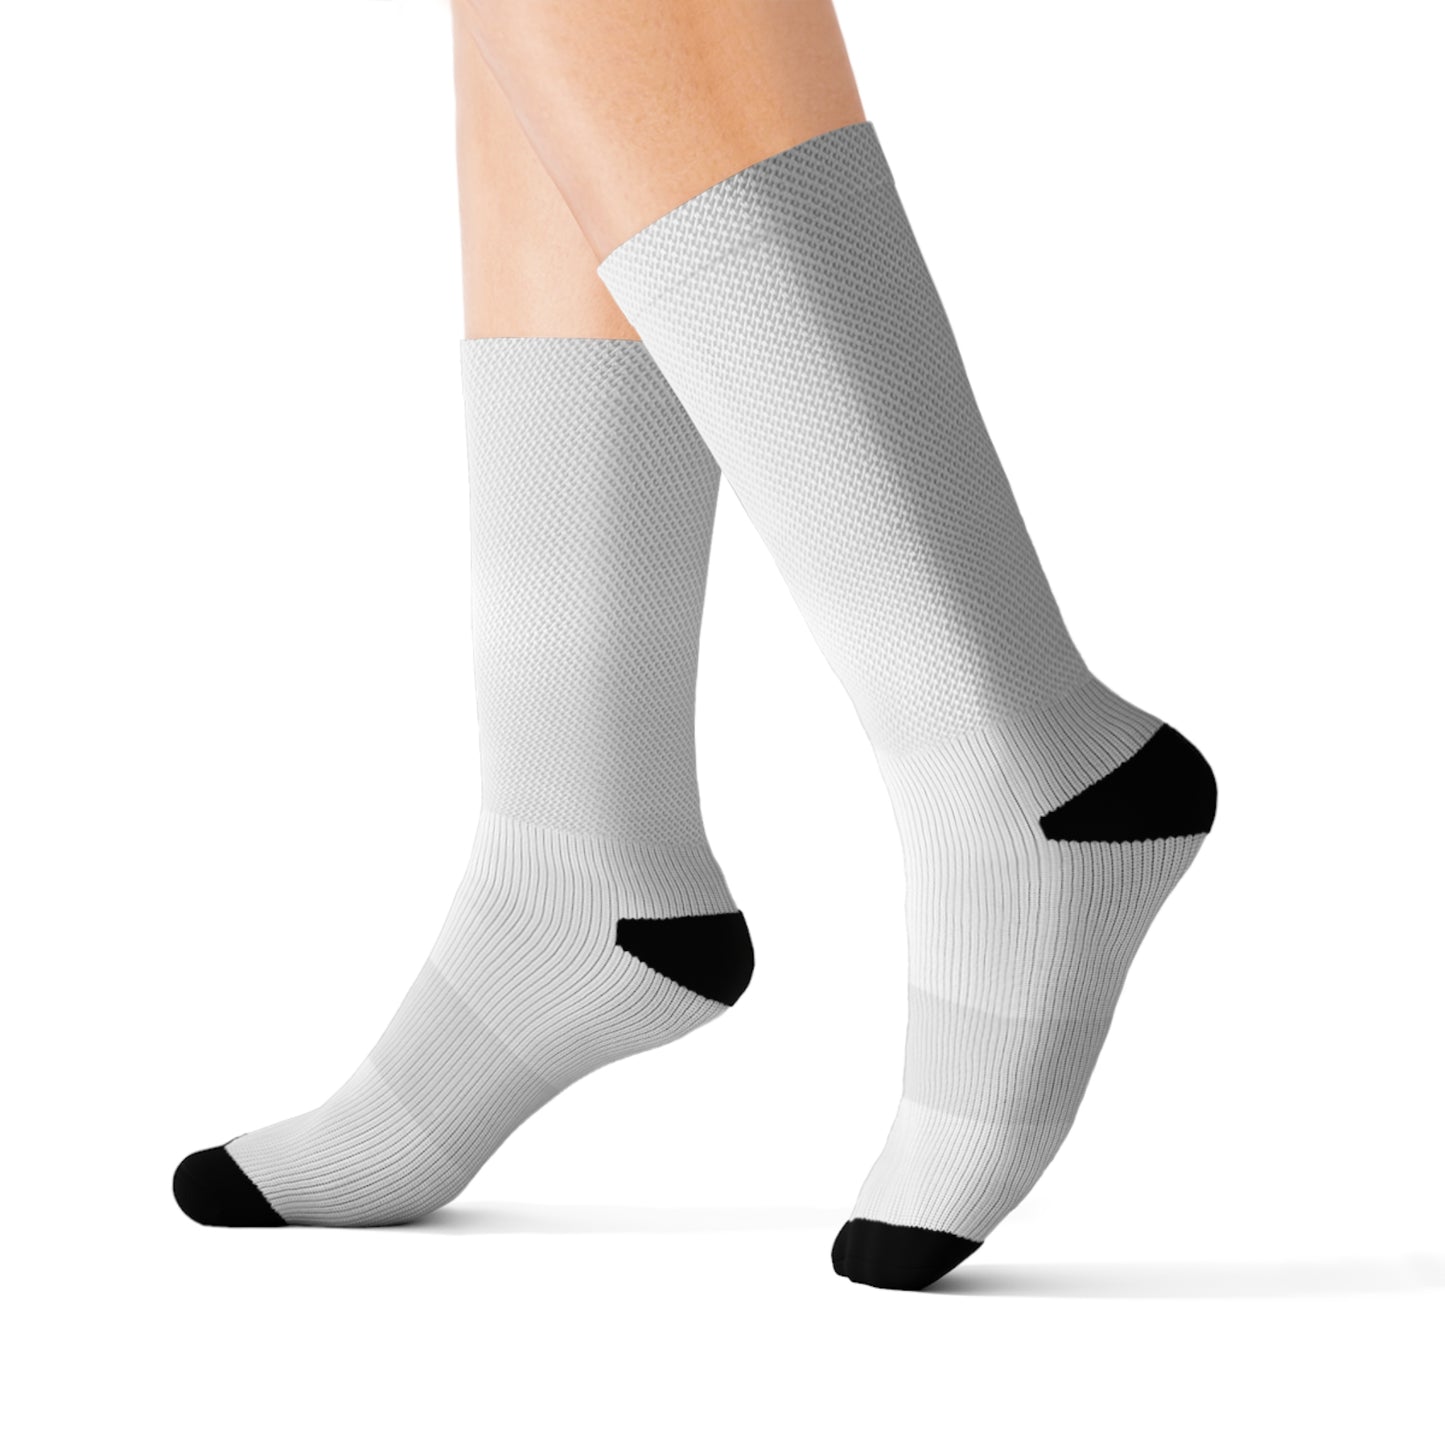 Gravity Falls Themed Socks